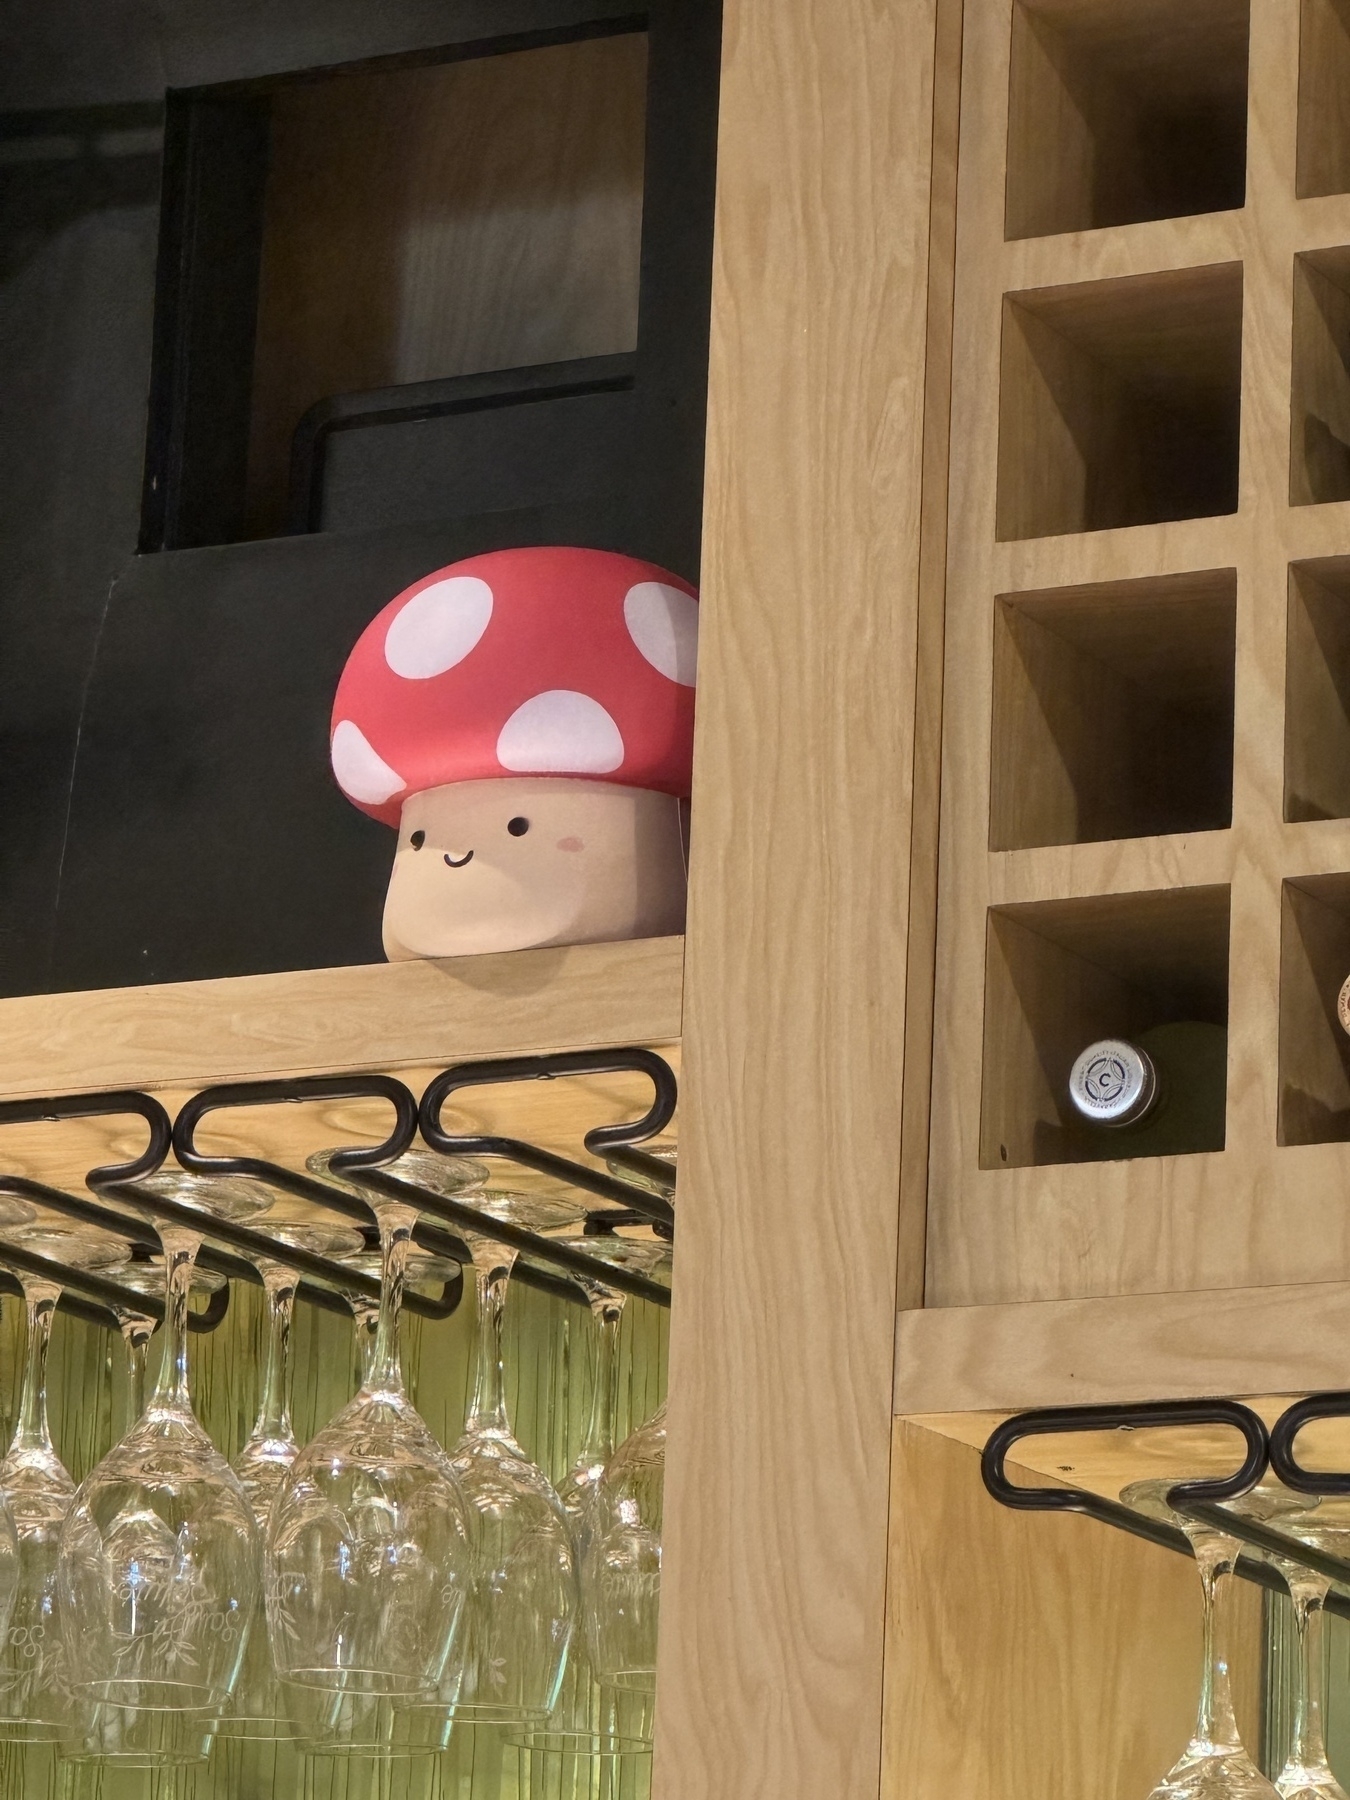 Toy mushroom at a bar. 